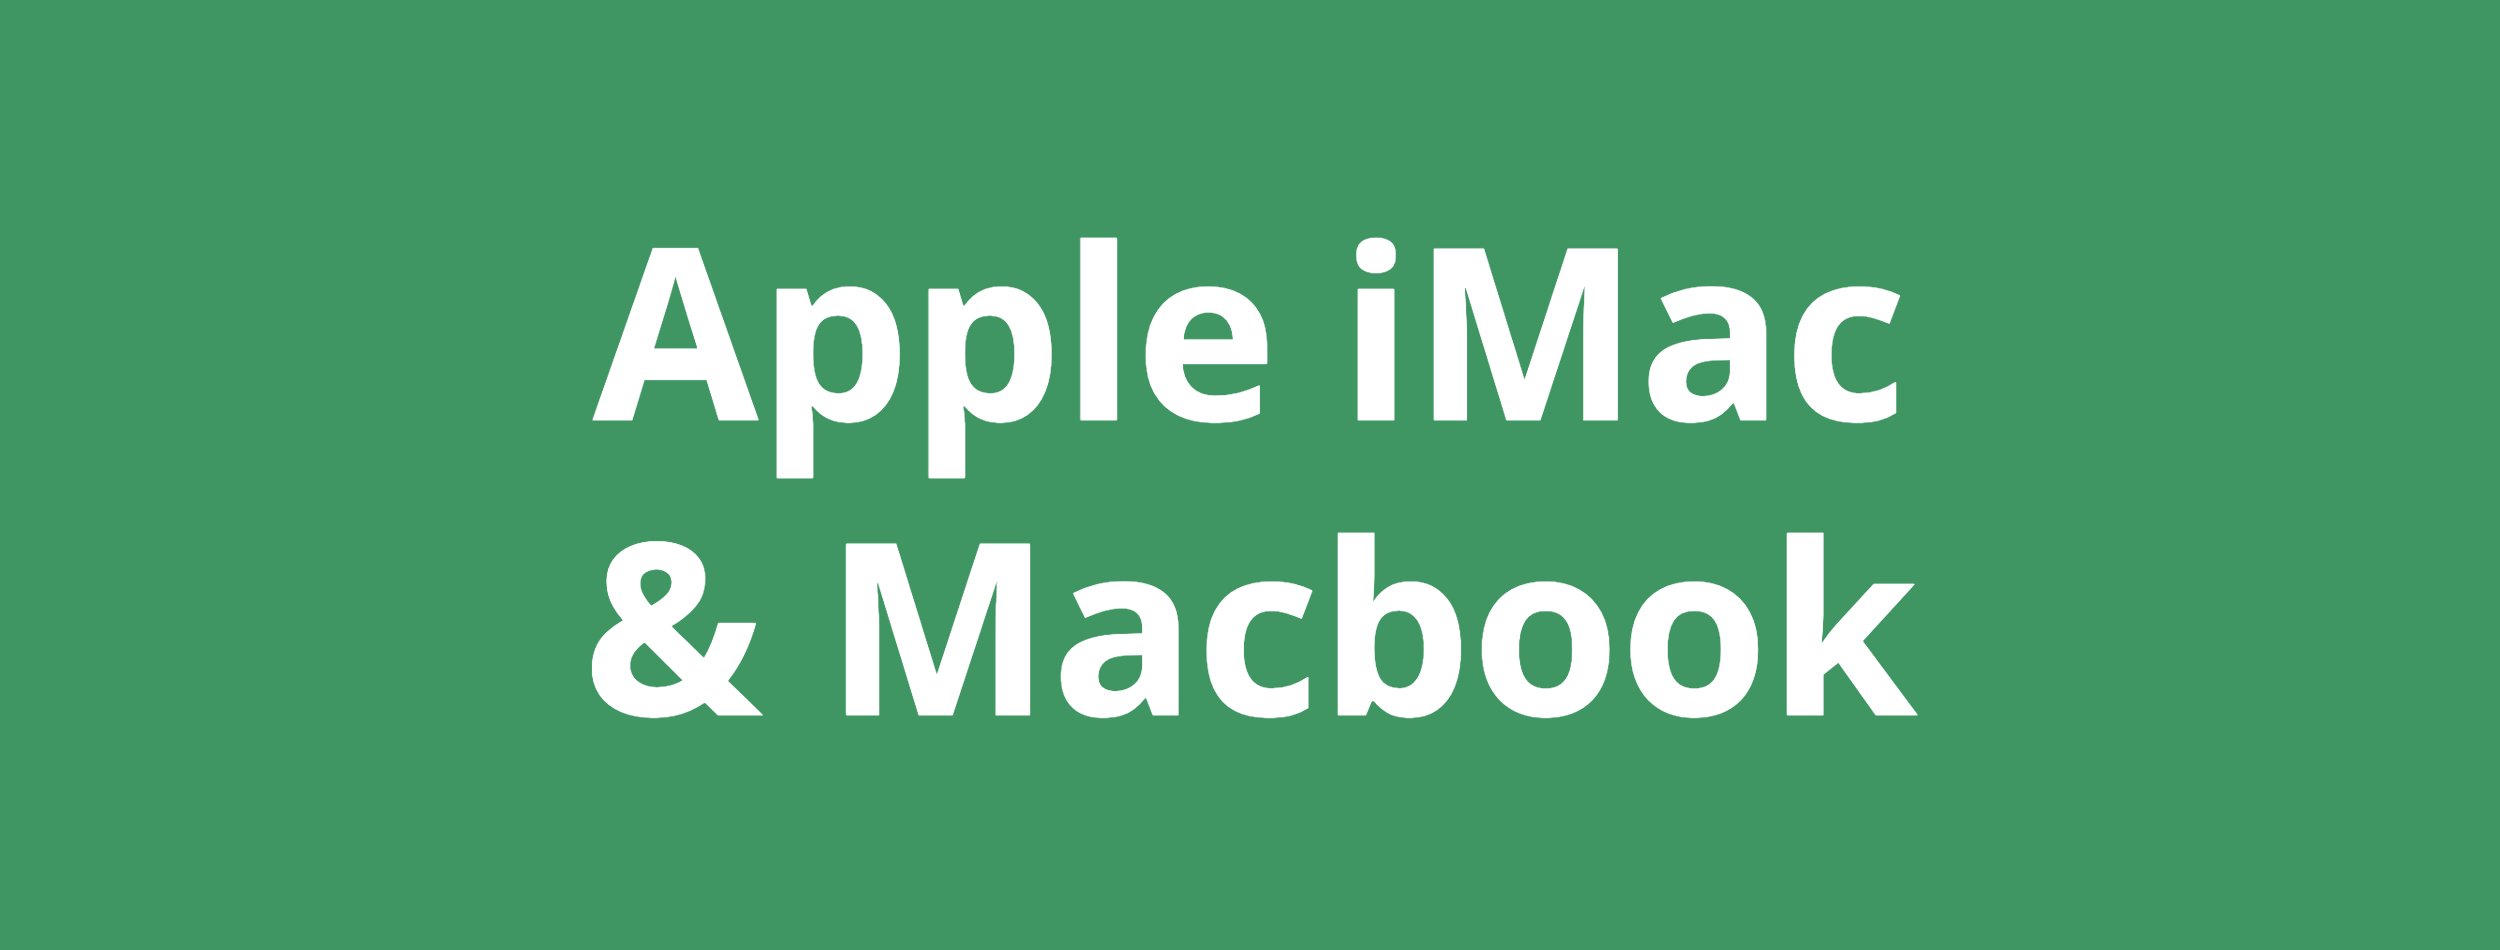 Apple iMac & Macbook